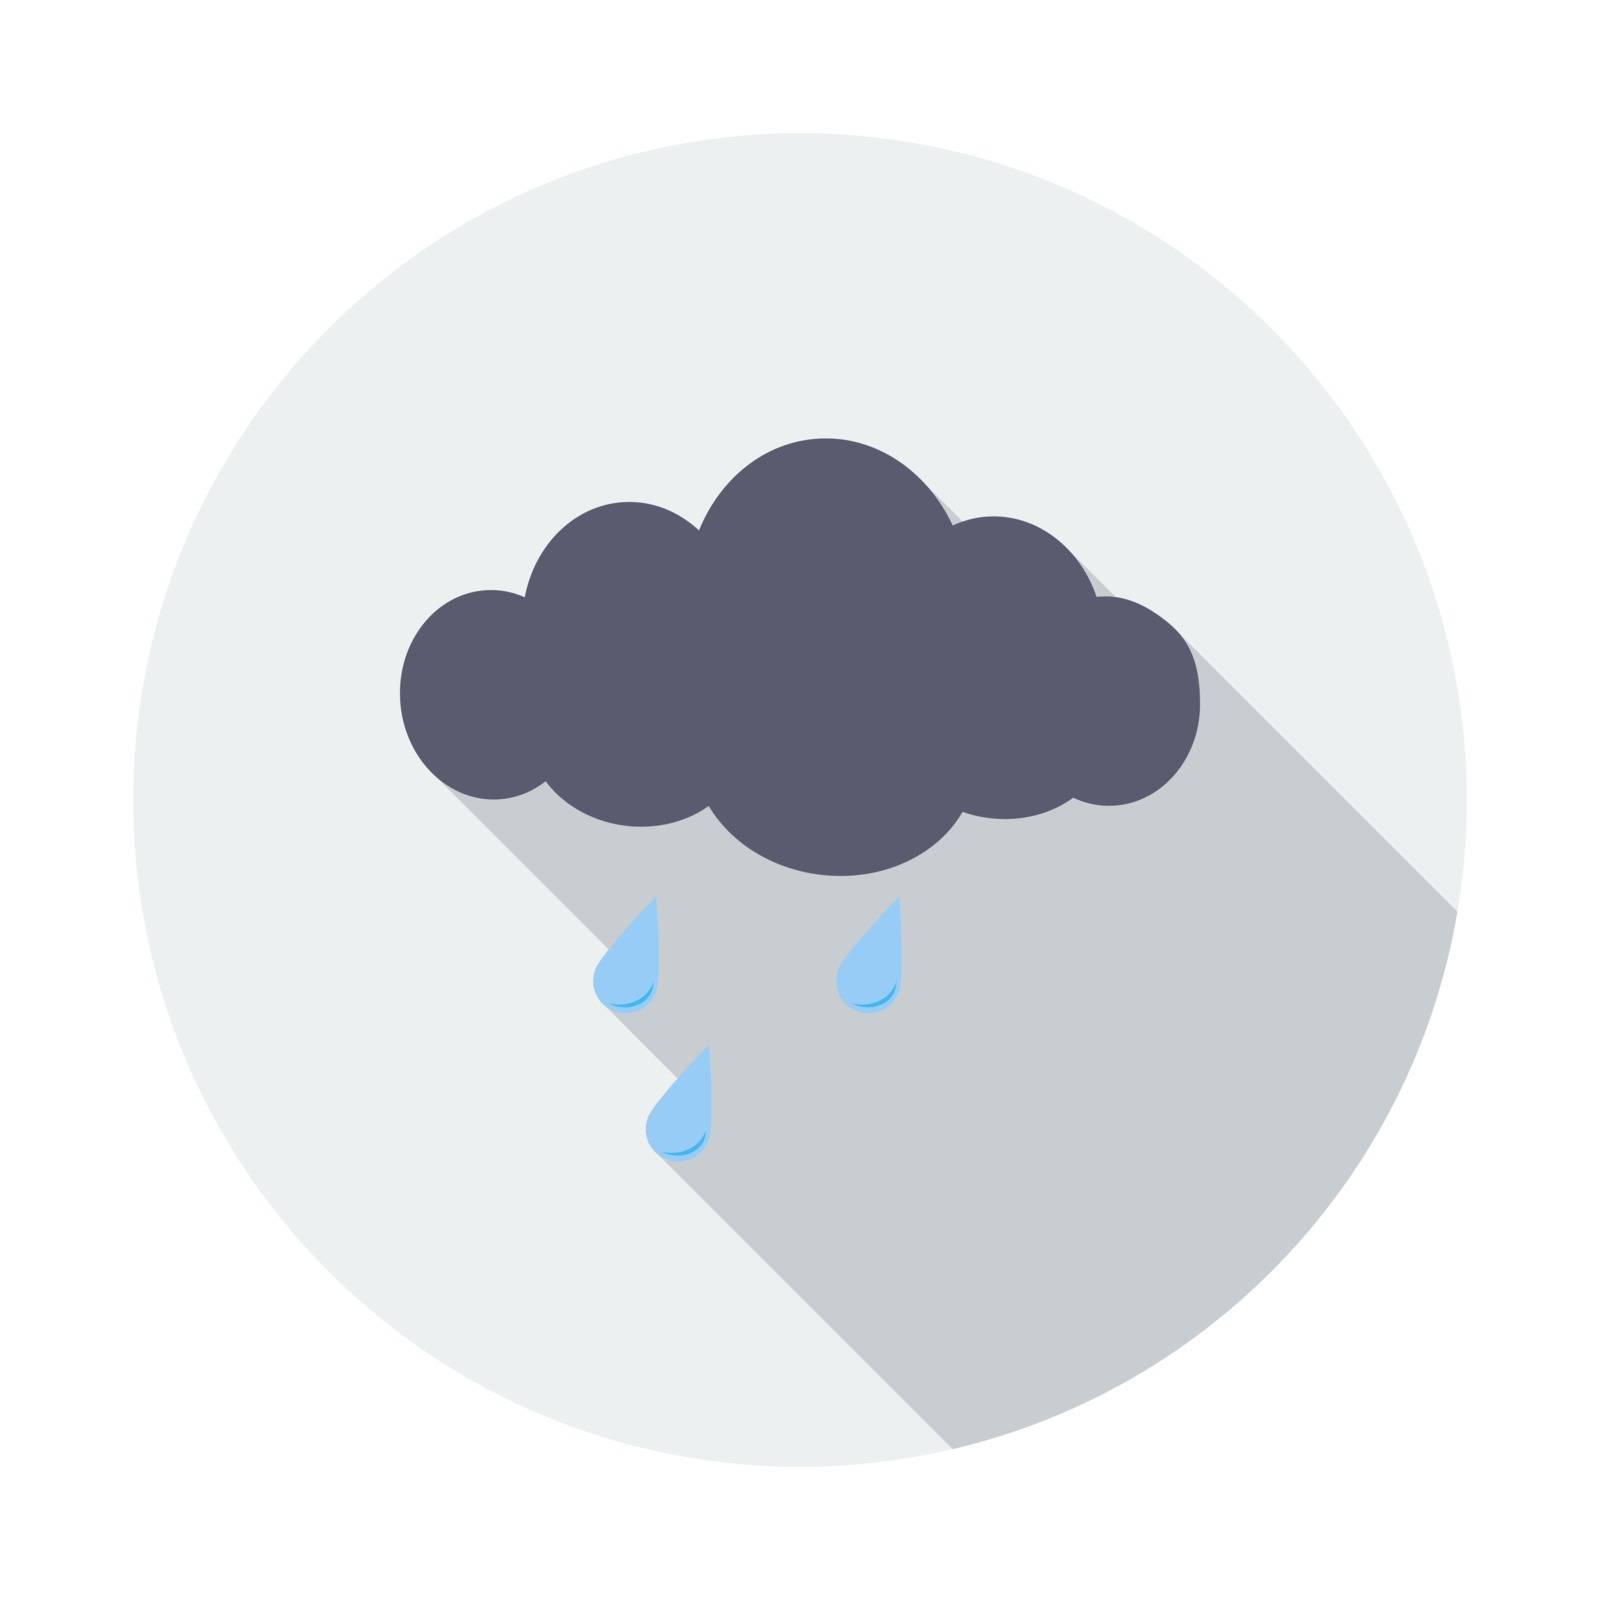 Rain. Single flat color icon. Vector illustration.